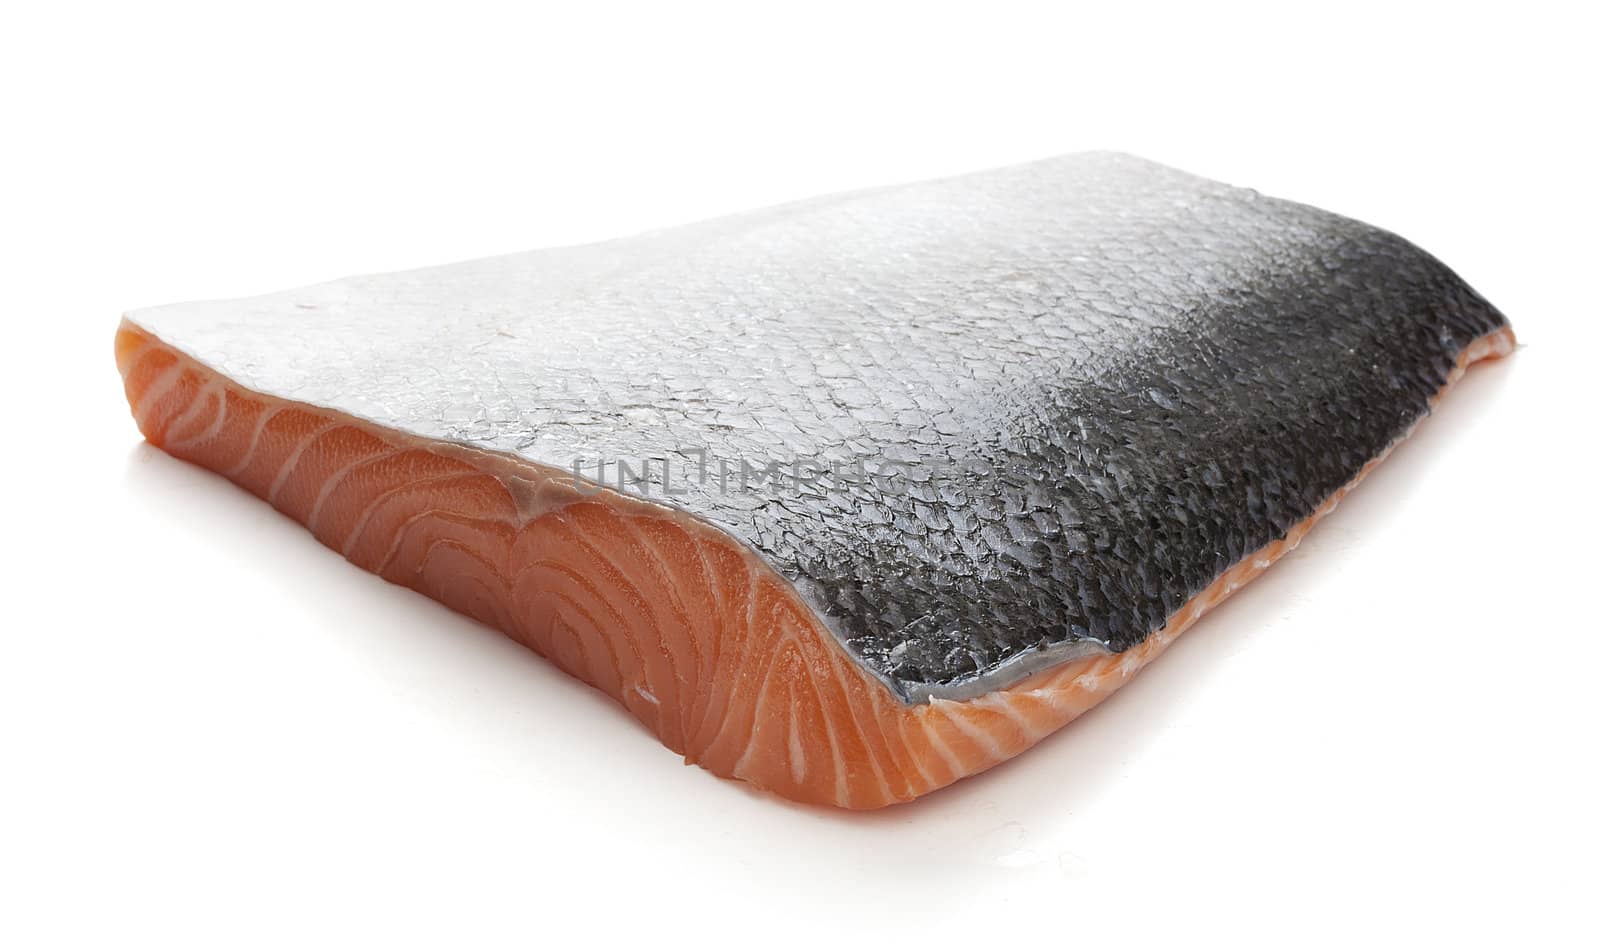 Chunk of raw salmon on the white background